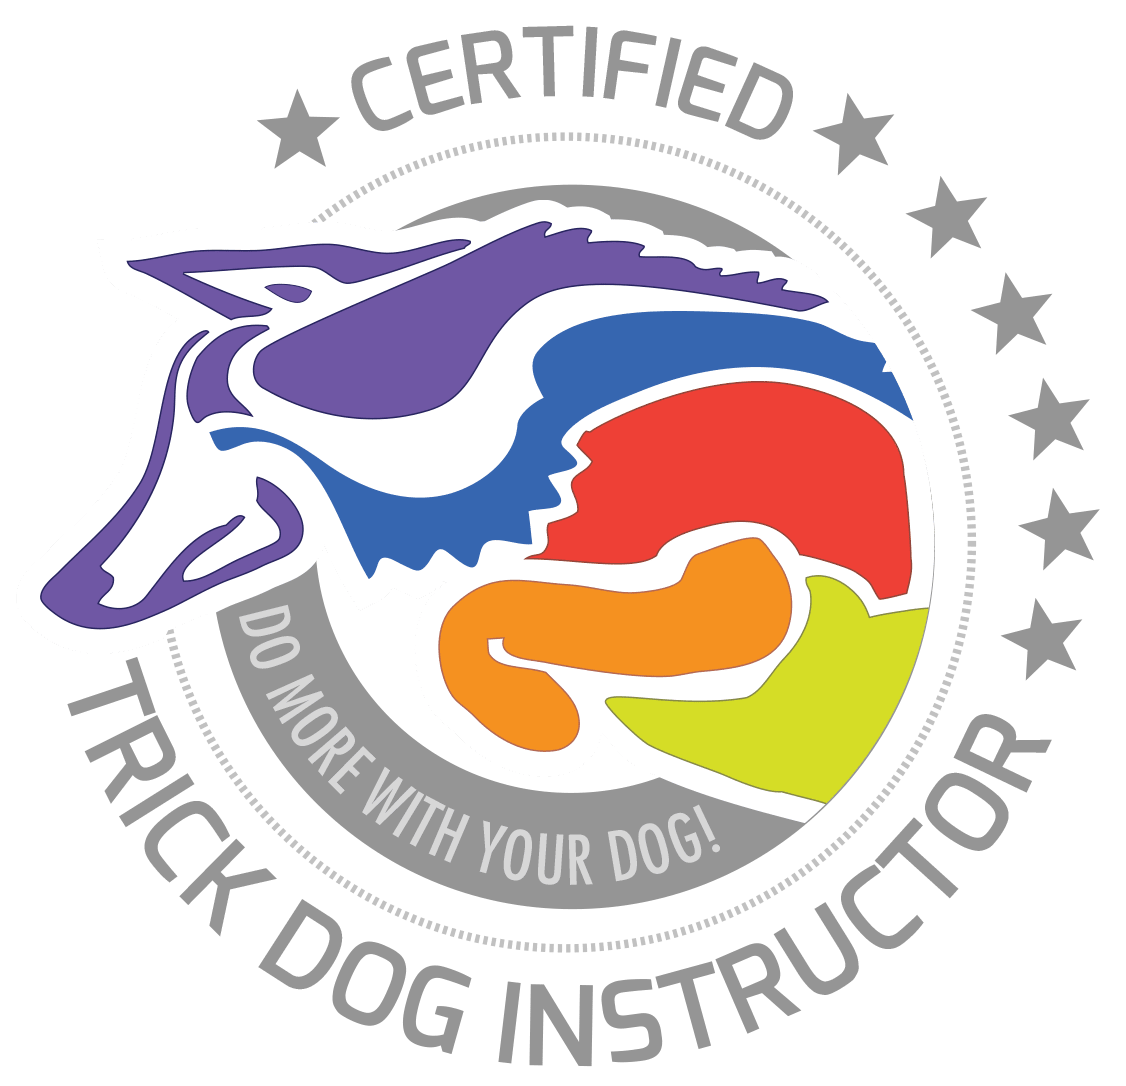 One Leg Up Canine Trick Dog Instructor